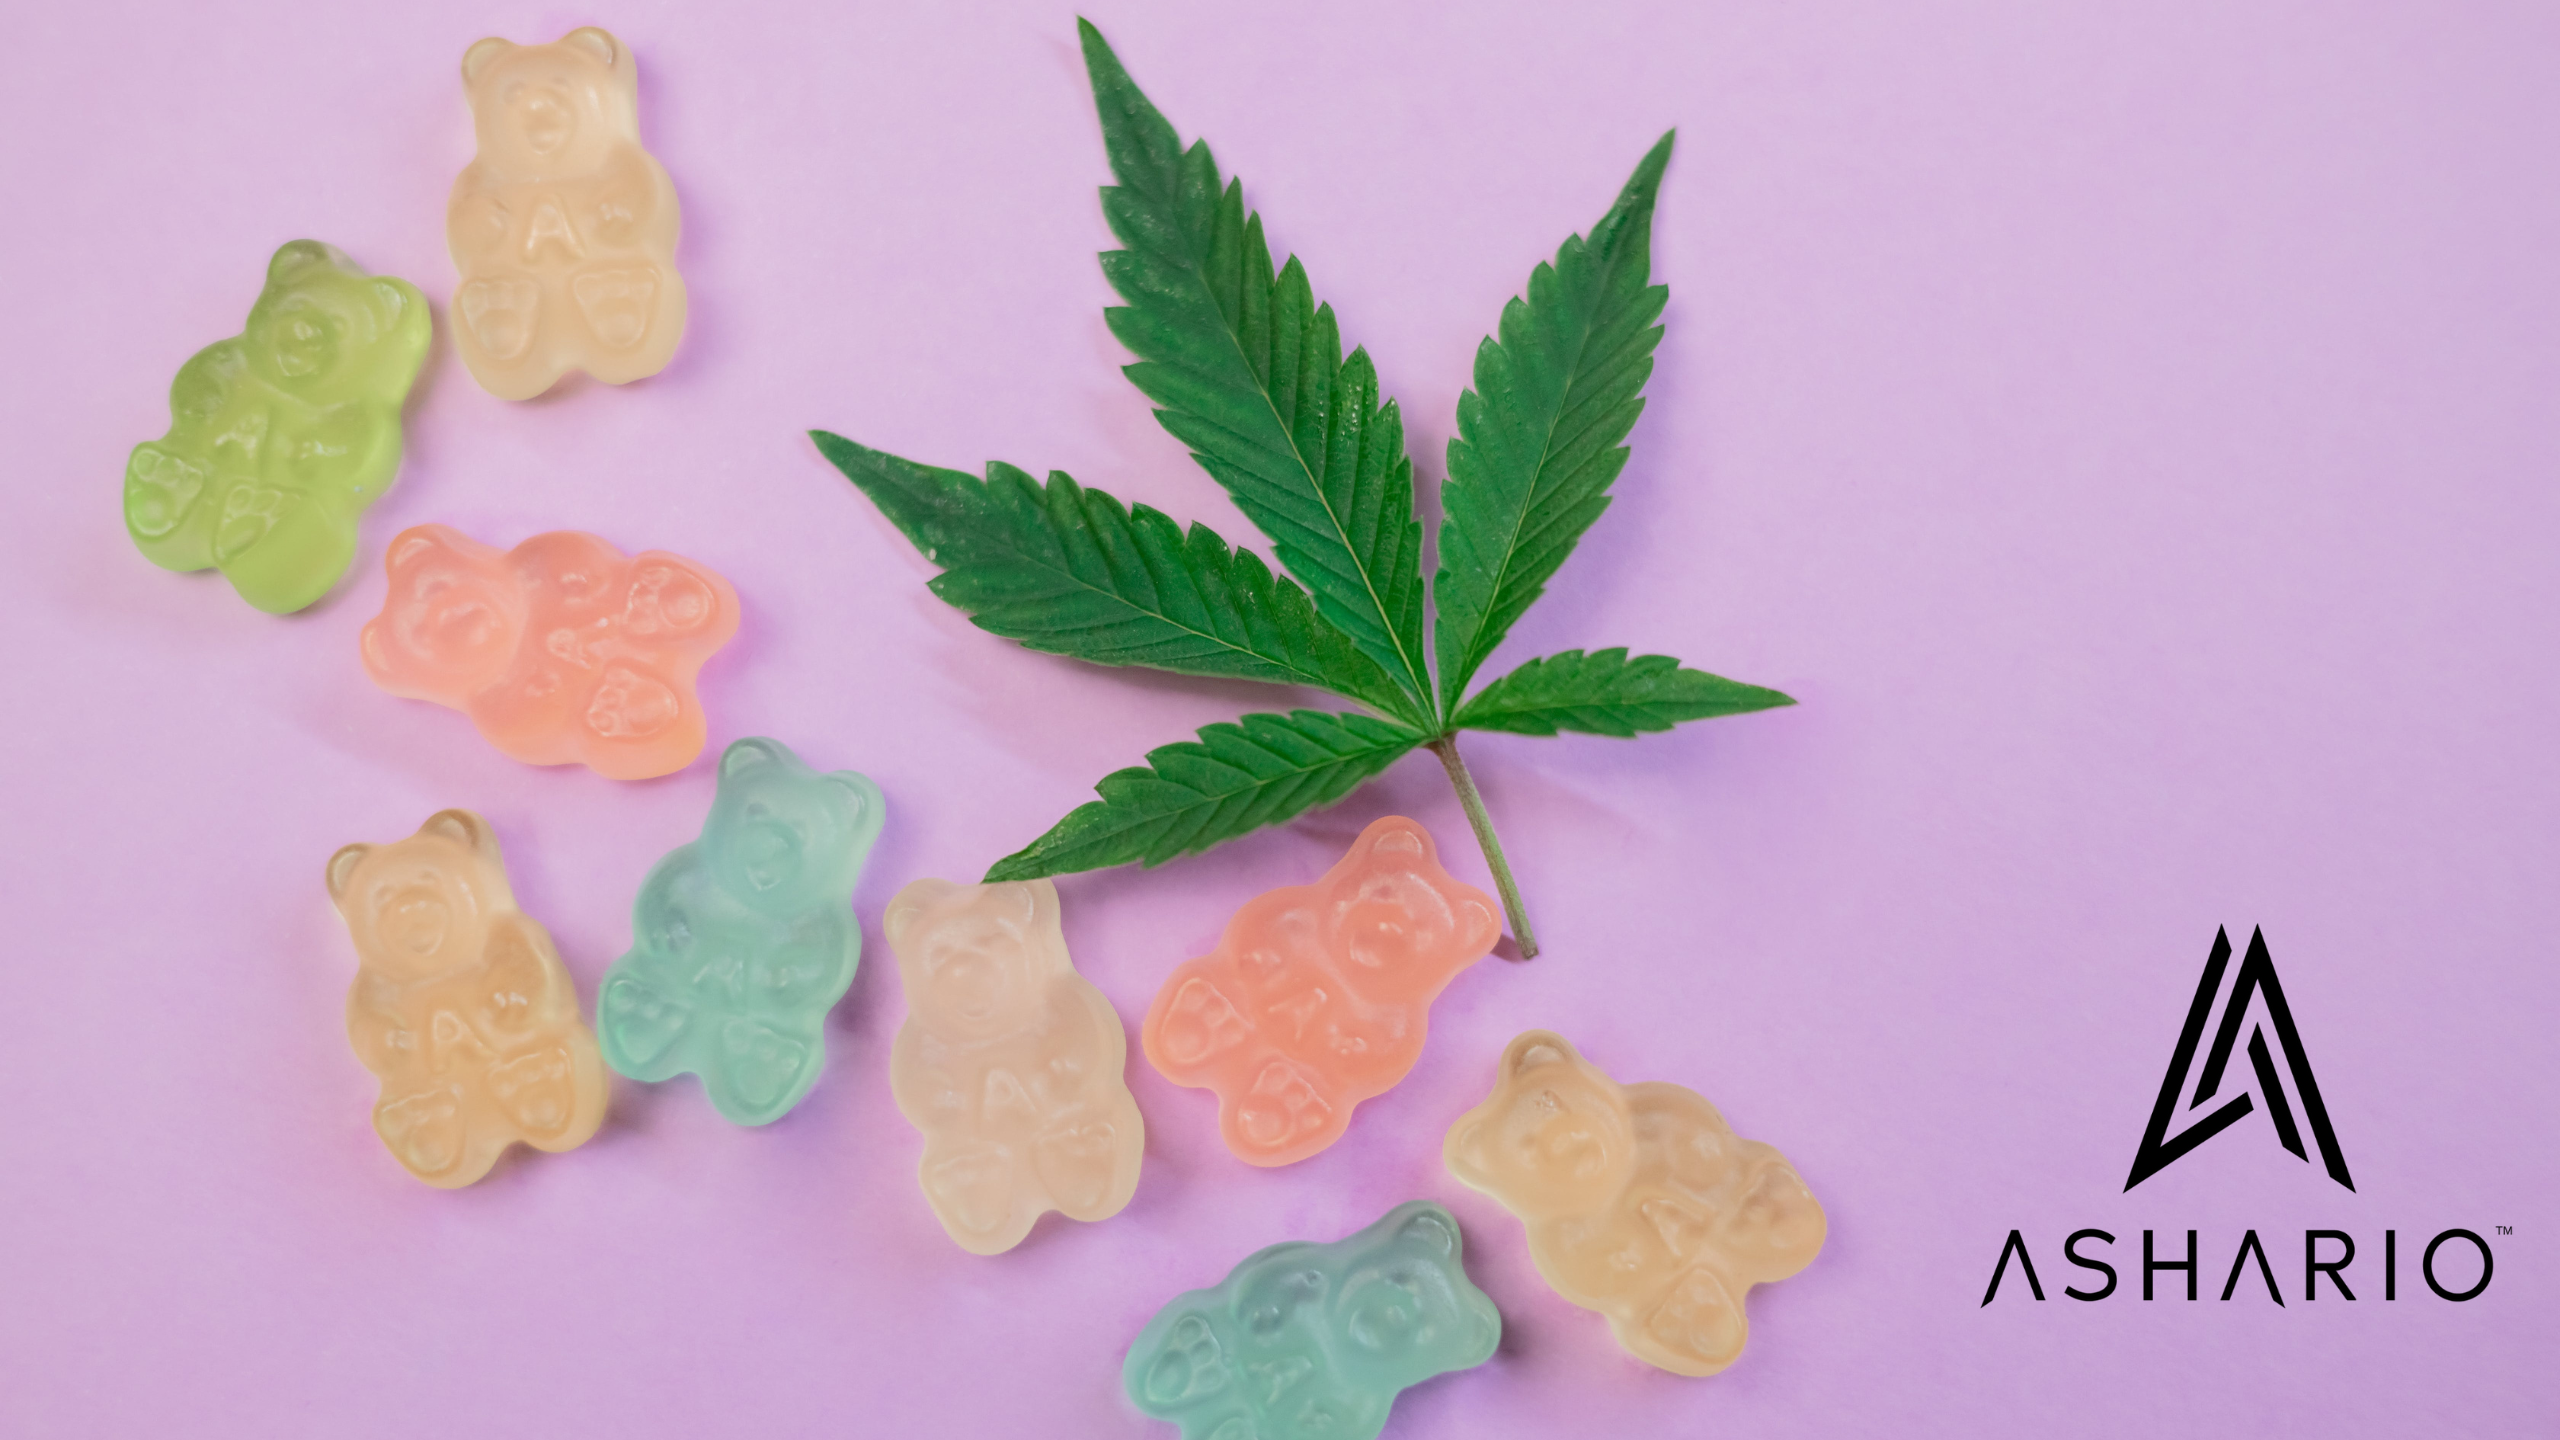 Ashario Cannabis Presents: Limited Edition High-Potency THC Edibles